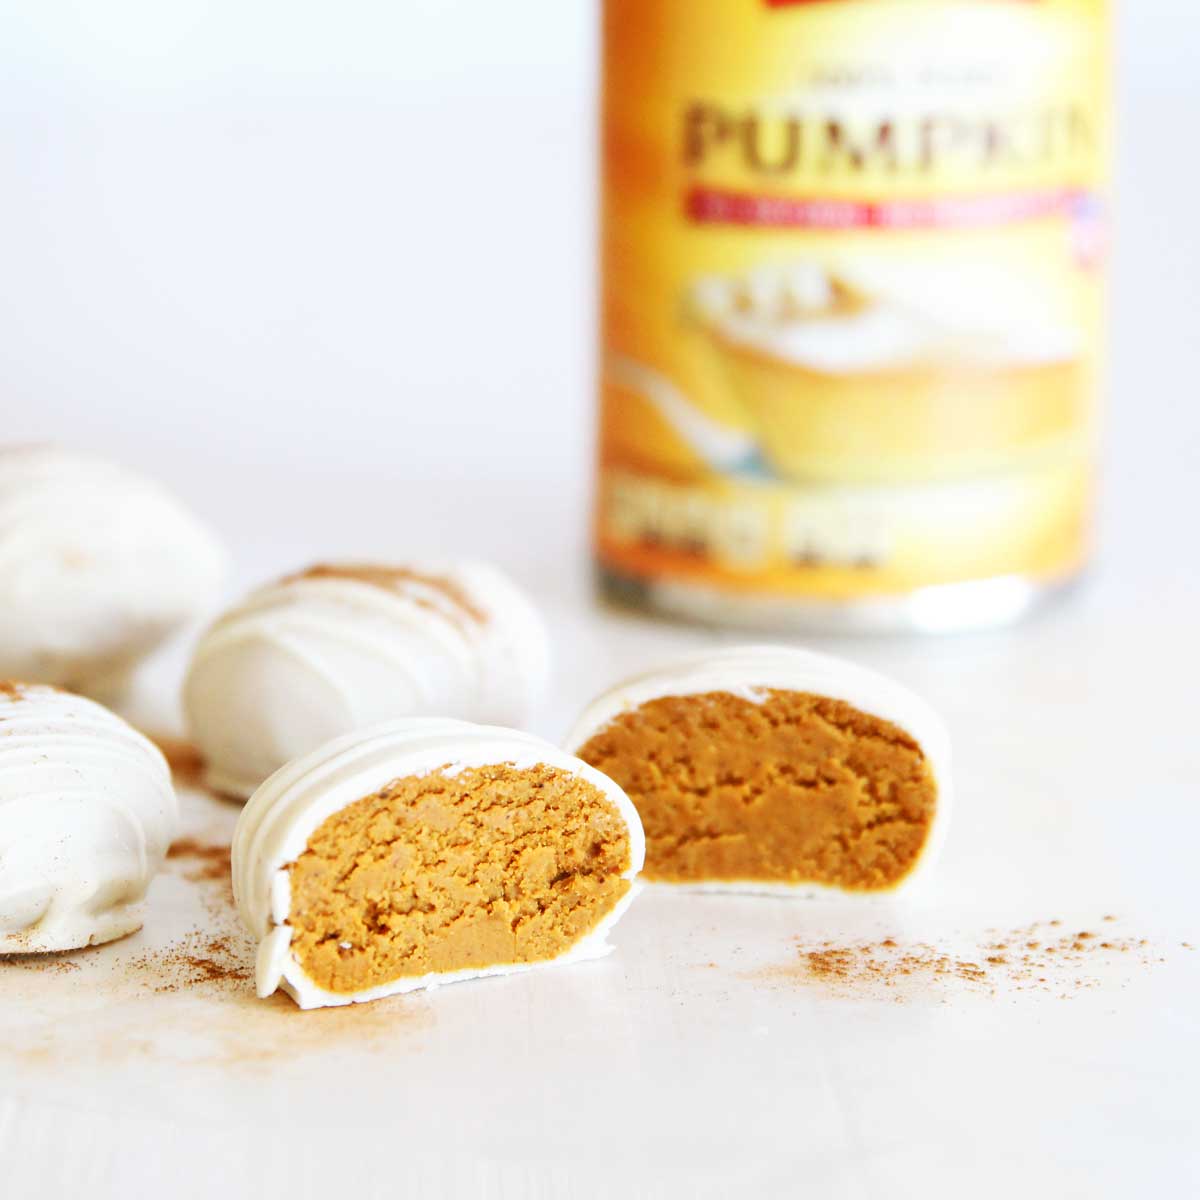 PB Fit Pumpkin Spice White Chocolate Easter Eggs (4-Ingredient Vegan Recipe!) - Flourless Pumpkin Roll Cake